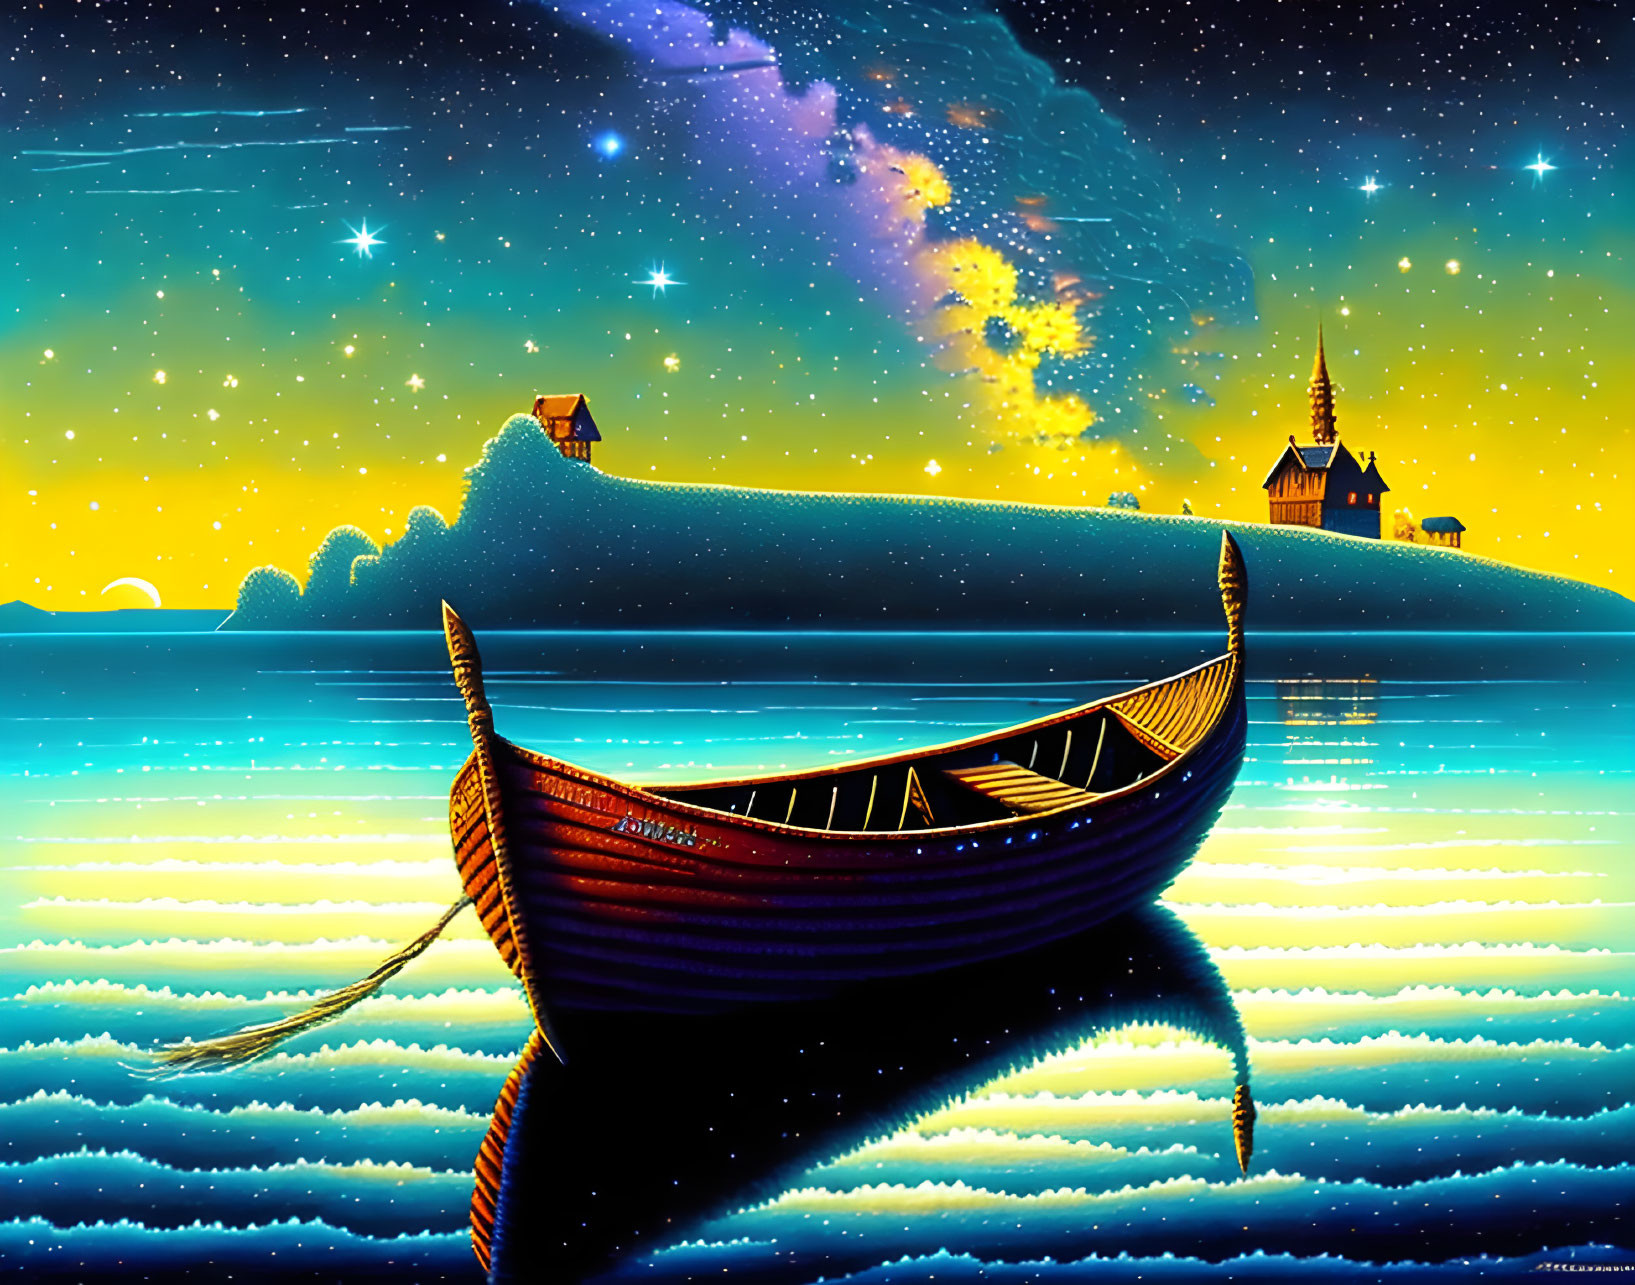 Digital art: Starry night sky, lake, boat, hill silhouettes